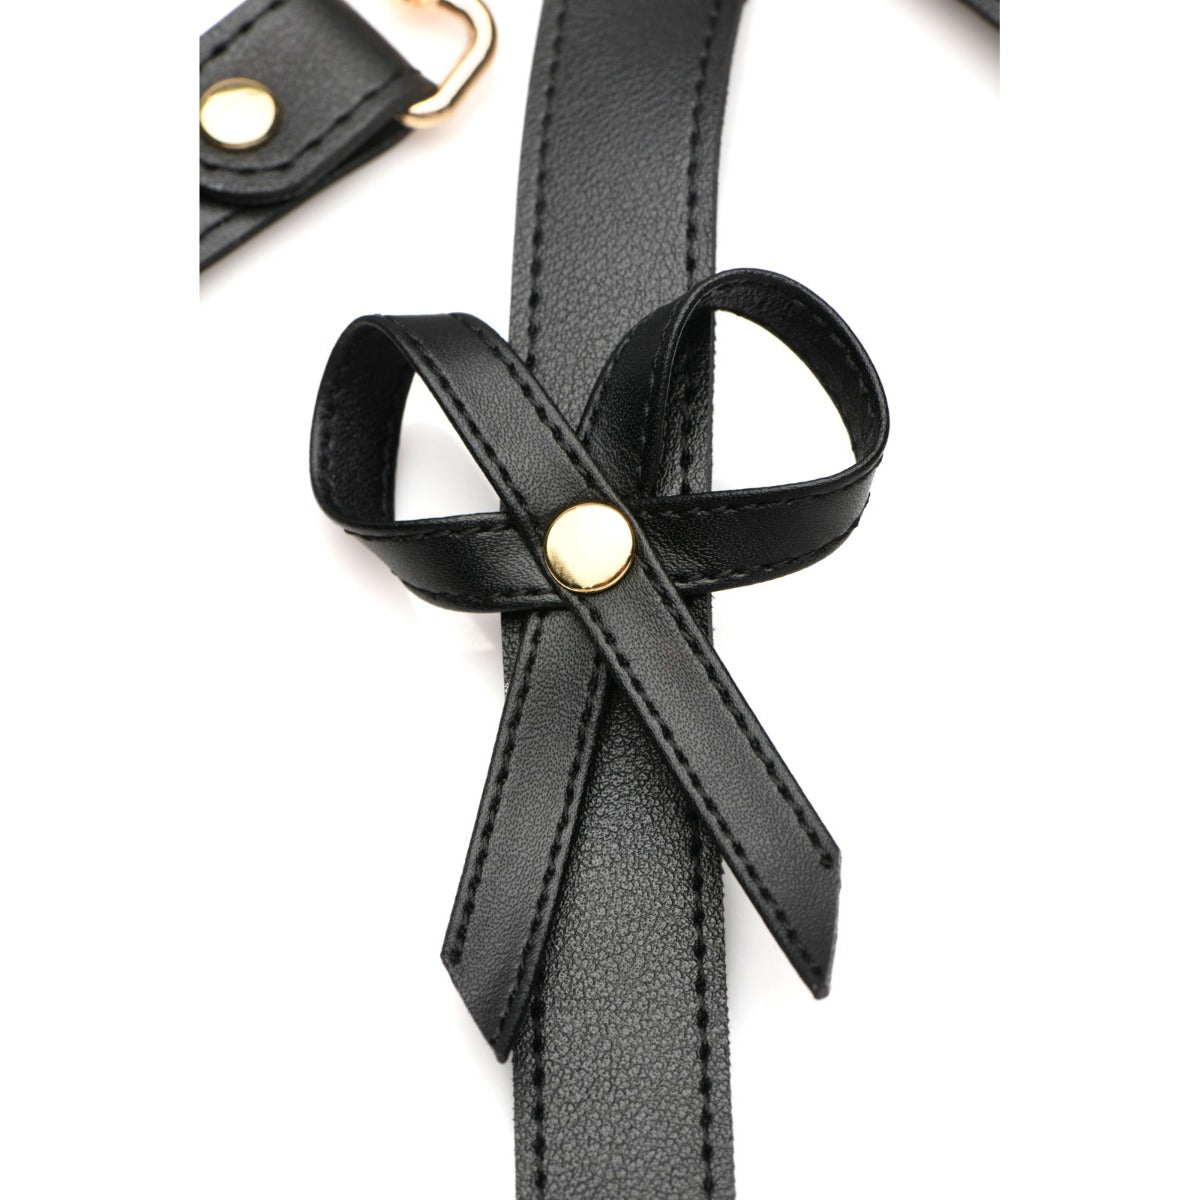 STRICT | Black Bondage Harness With Bows - M/L Black